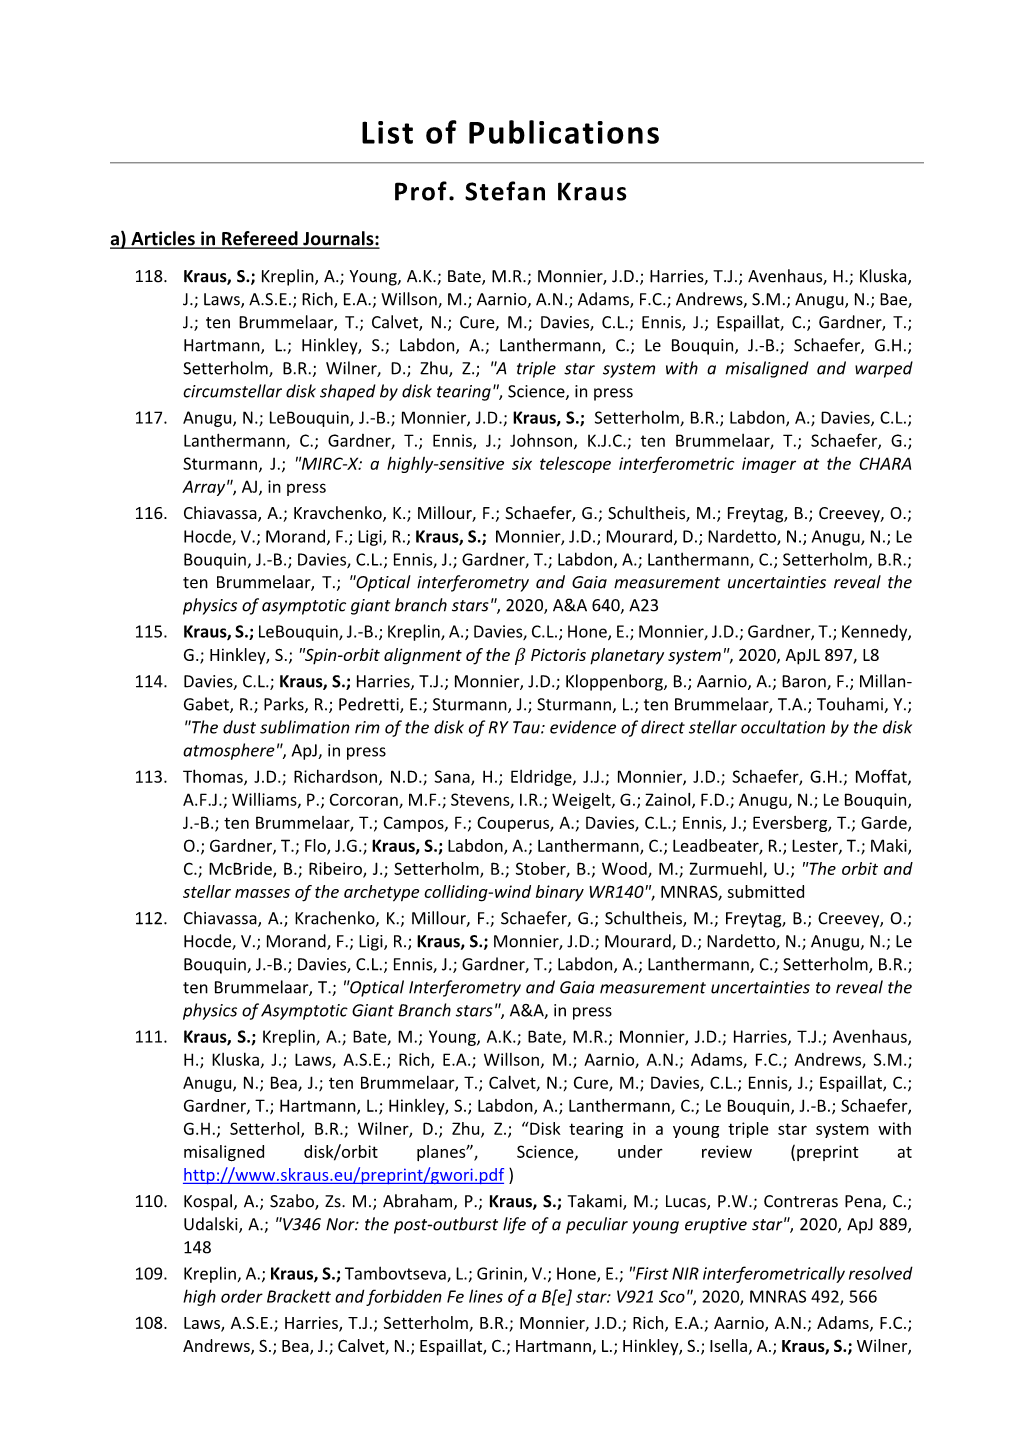 List of Publications Prof. Stefan Kraus